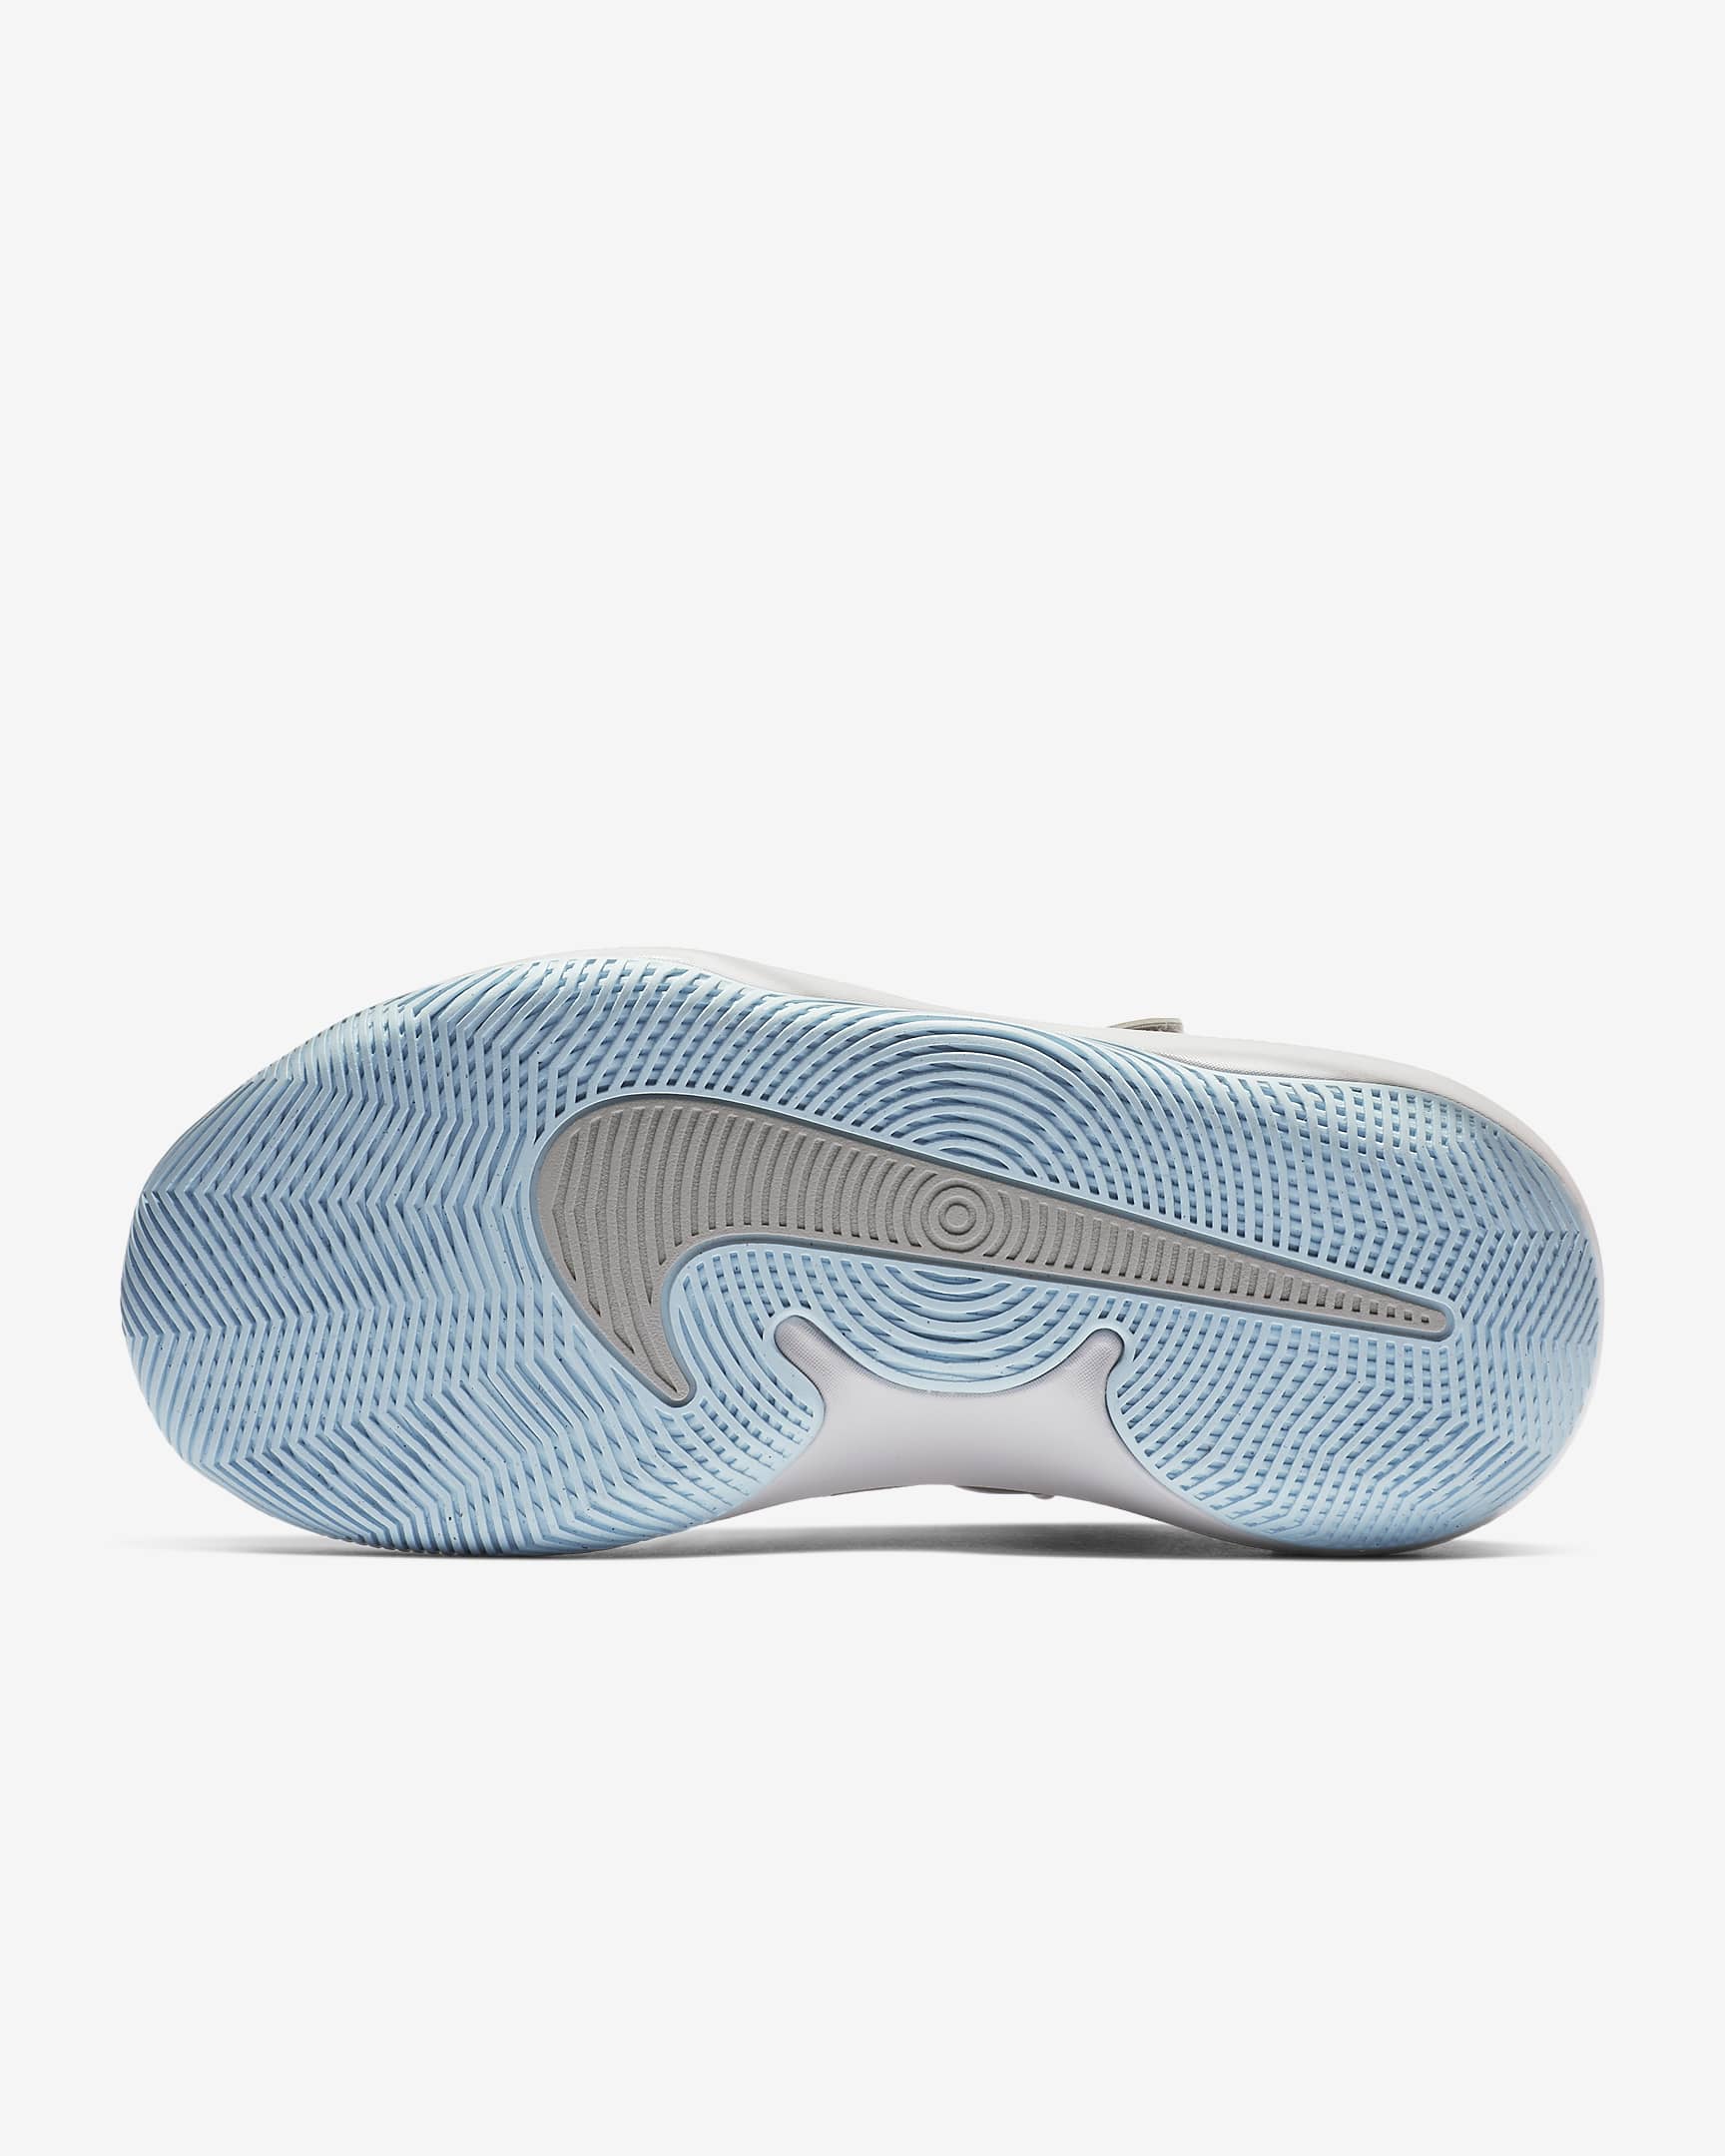 Nike Air Precision II FlyEase (Extra-Wide) Women's Basketball Shoe ...